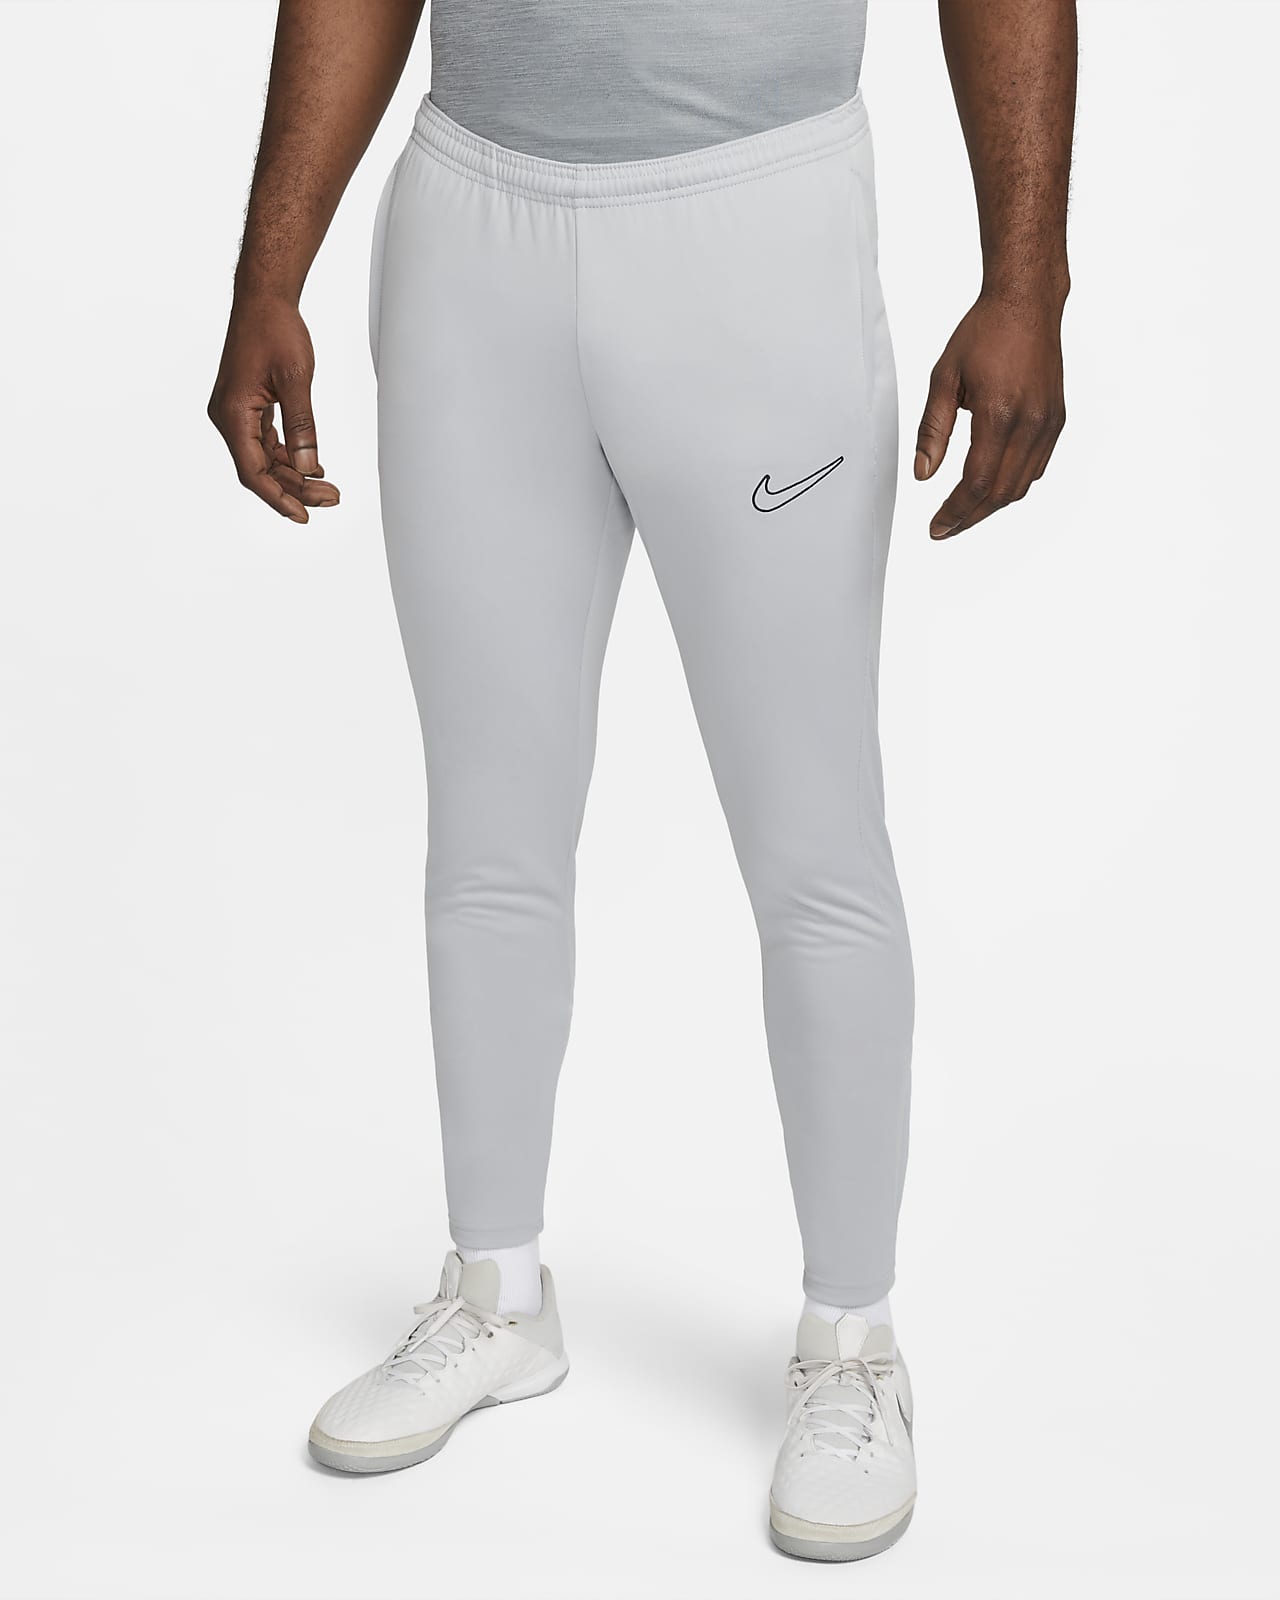 Pantalon taille haute Nike Sportswear Dri-FIT Tech Pack pour femme. Nike LU